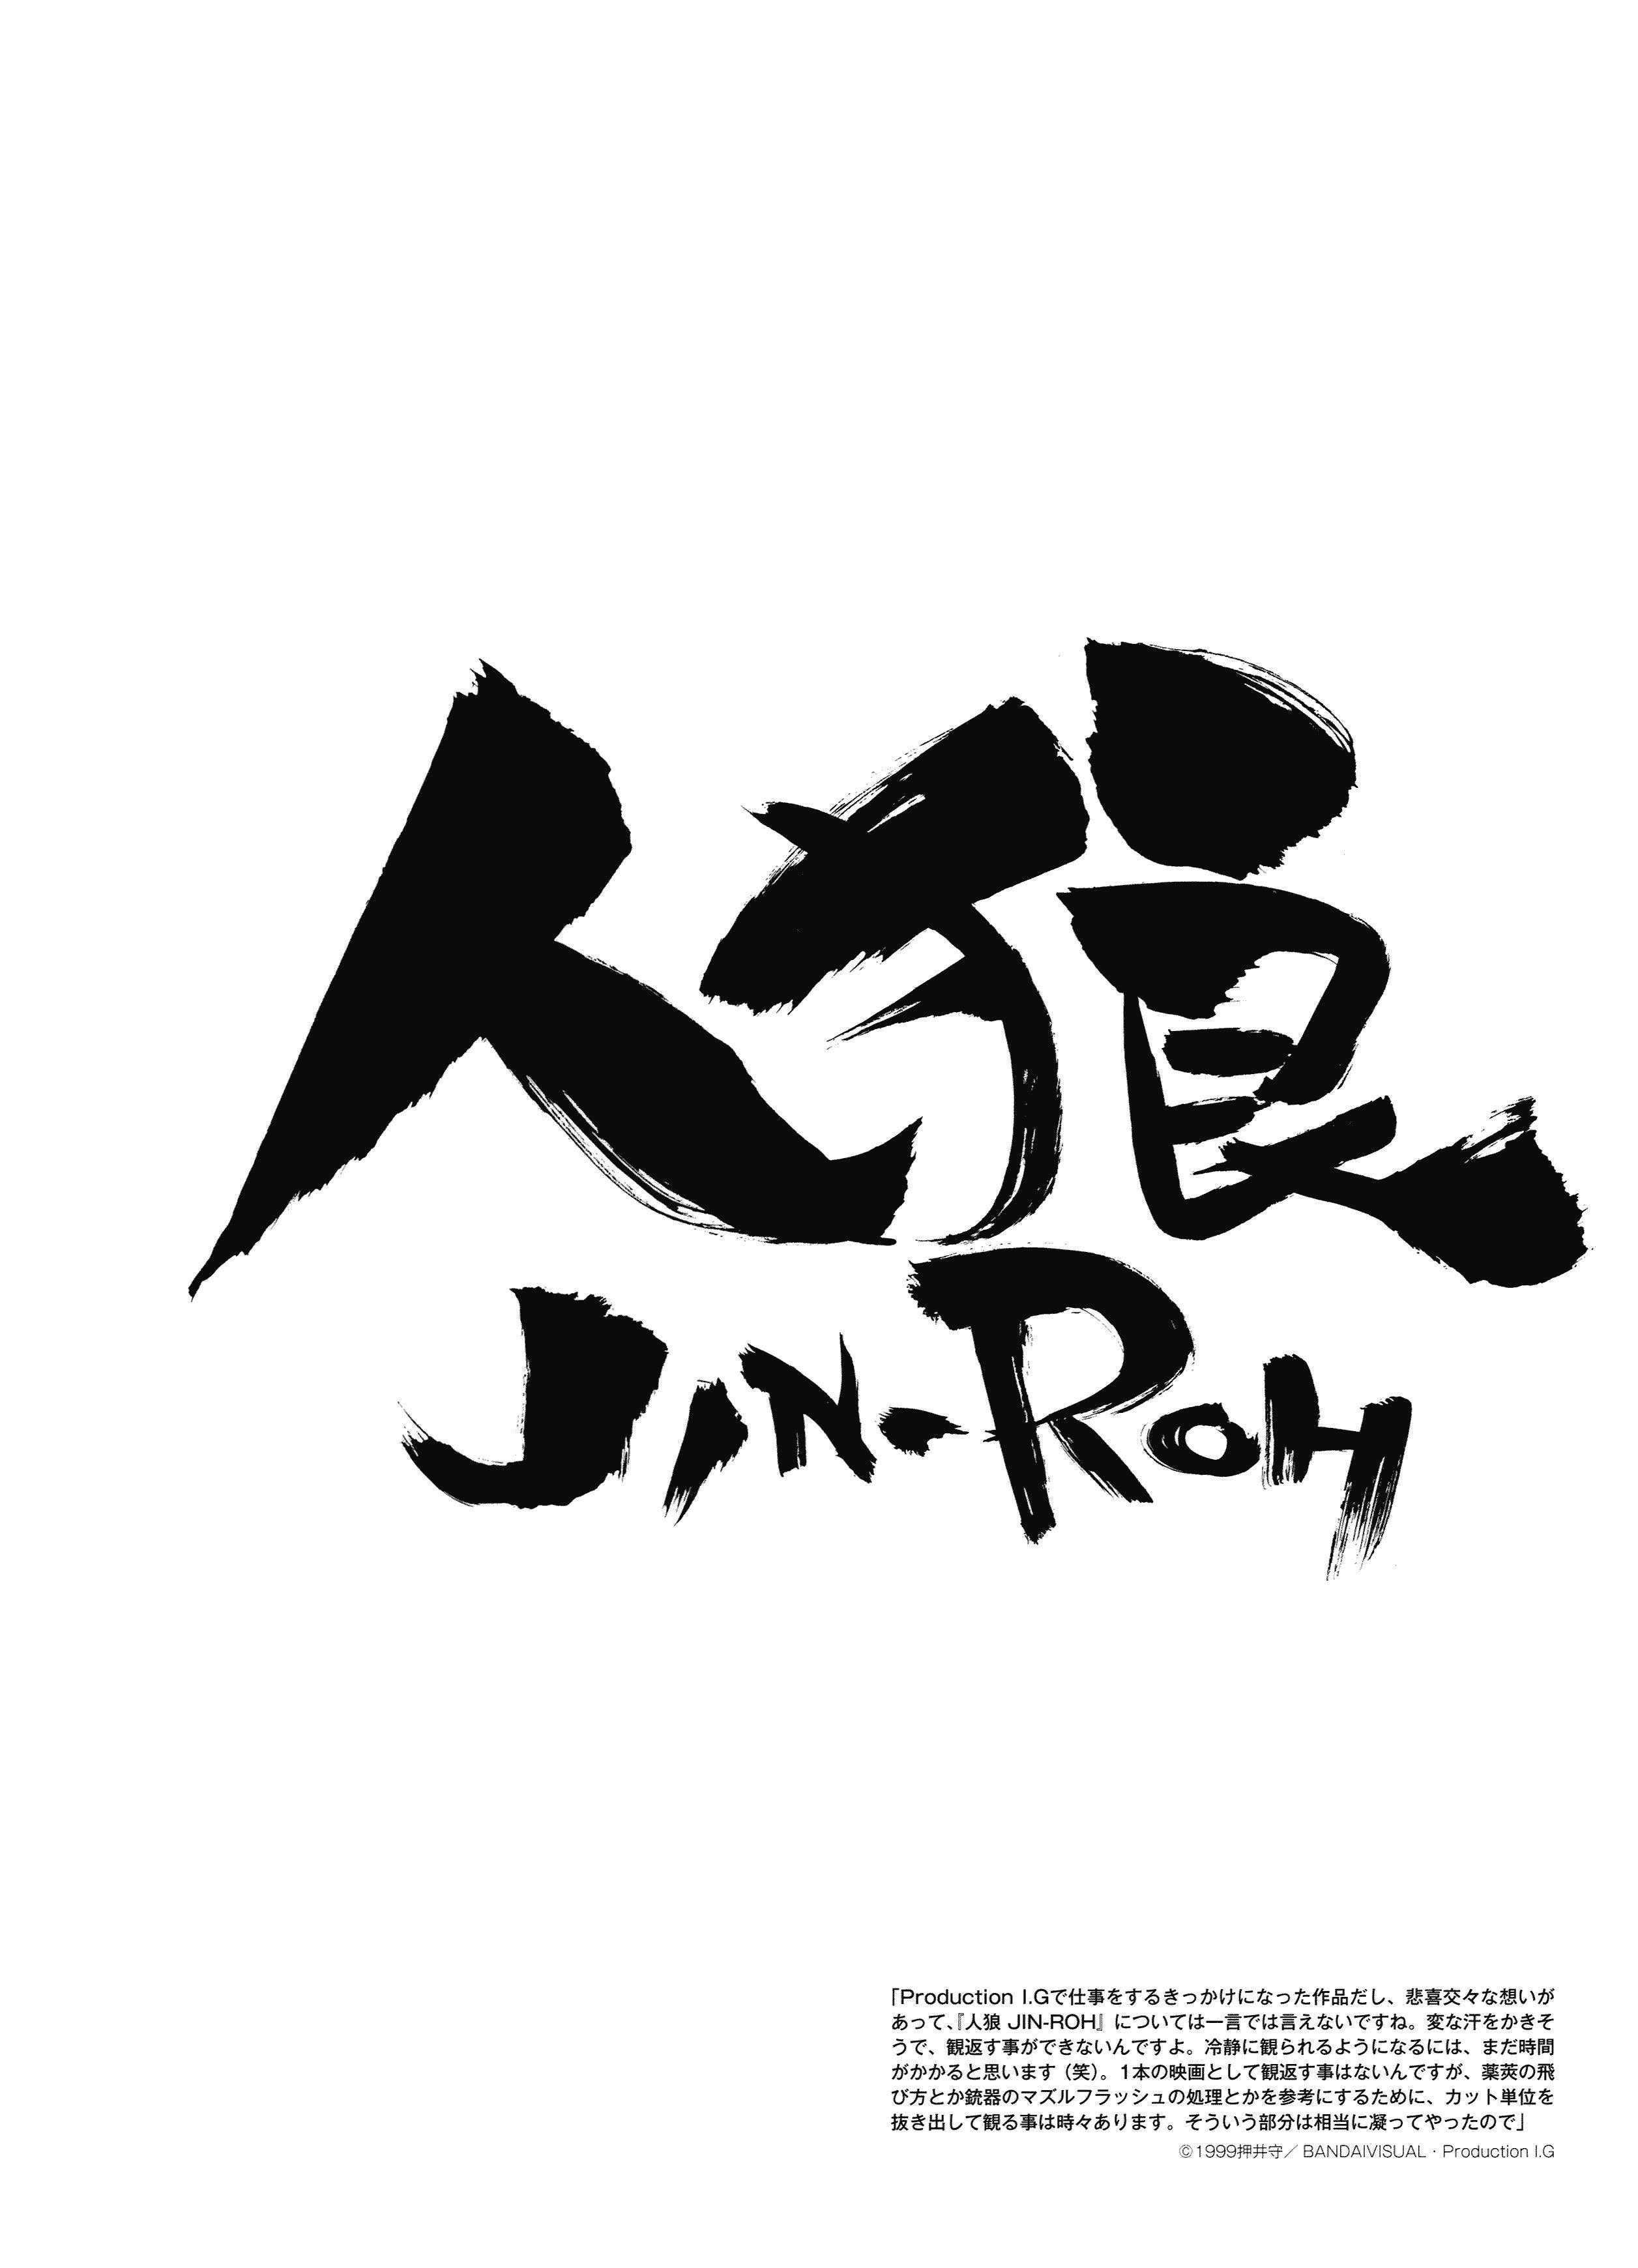 Jin Logo - jin-roh logo text | #434789 | yande.re